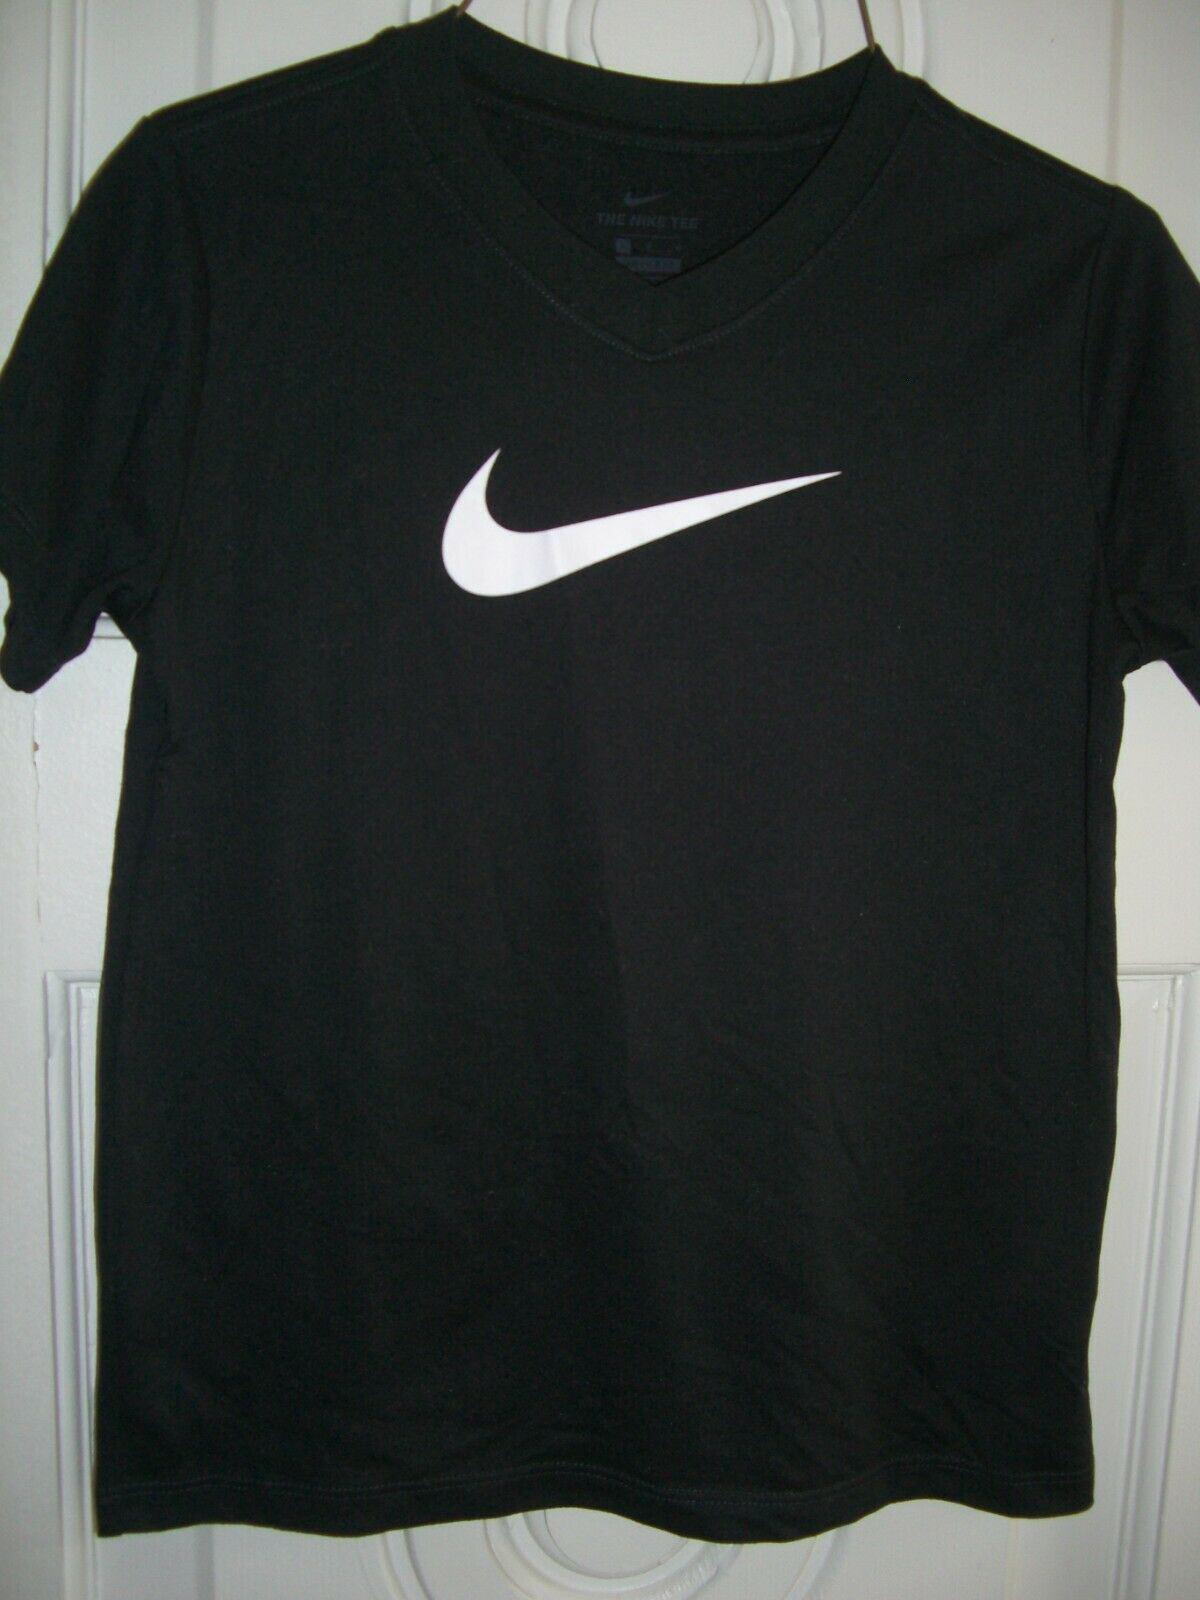 Youth Nike Dri-fit Black Polyester Short Sleeve T-shirt/size M